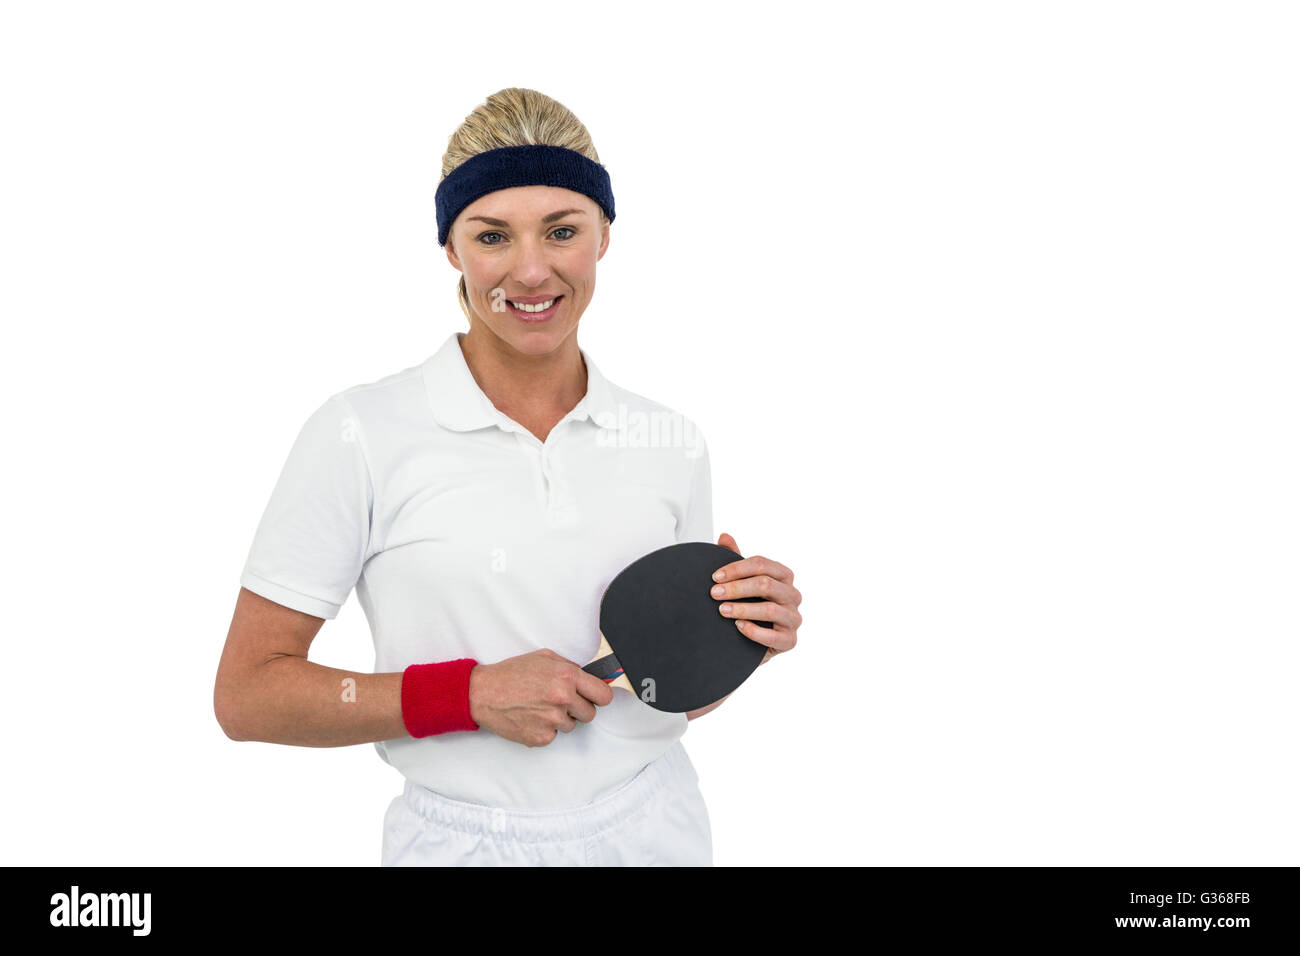 Female athlete holding table tennis paddle Stock Photo